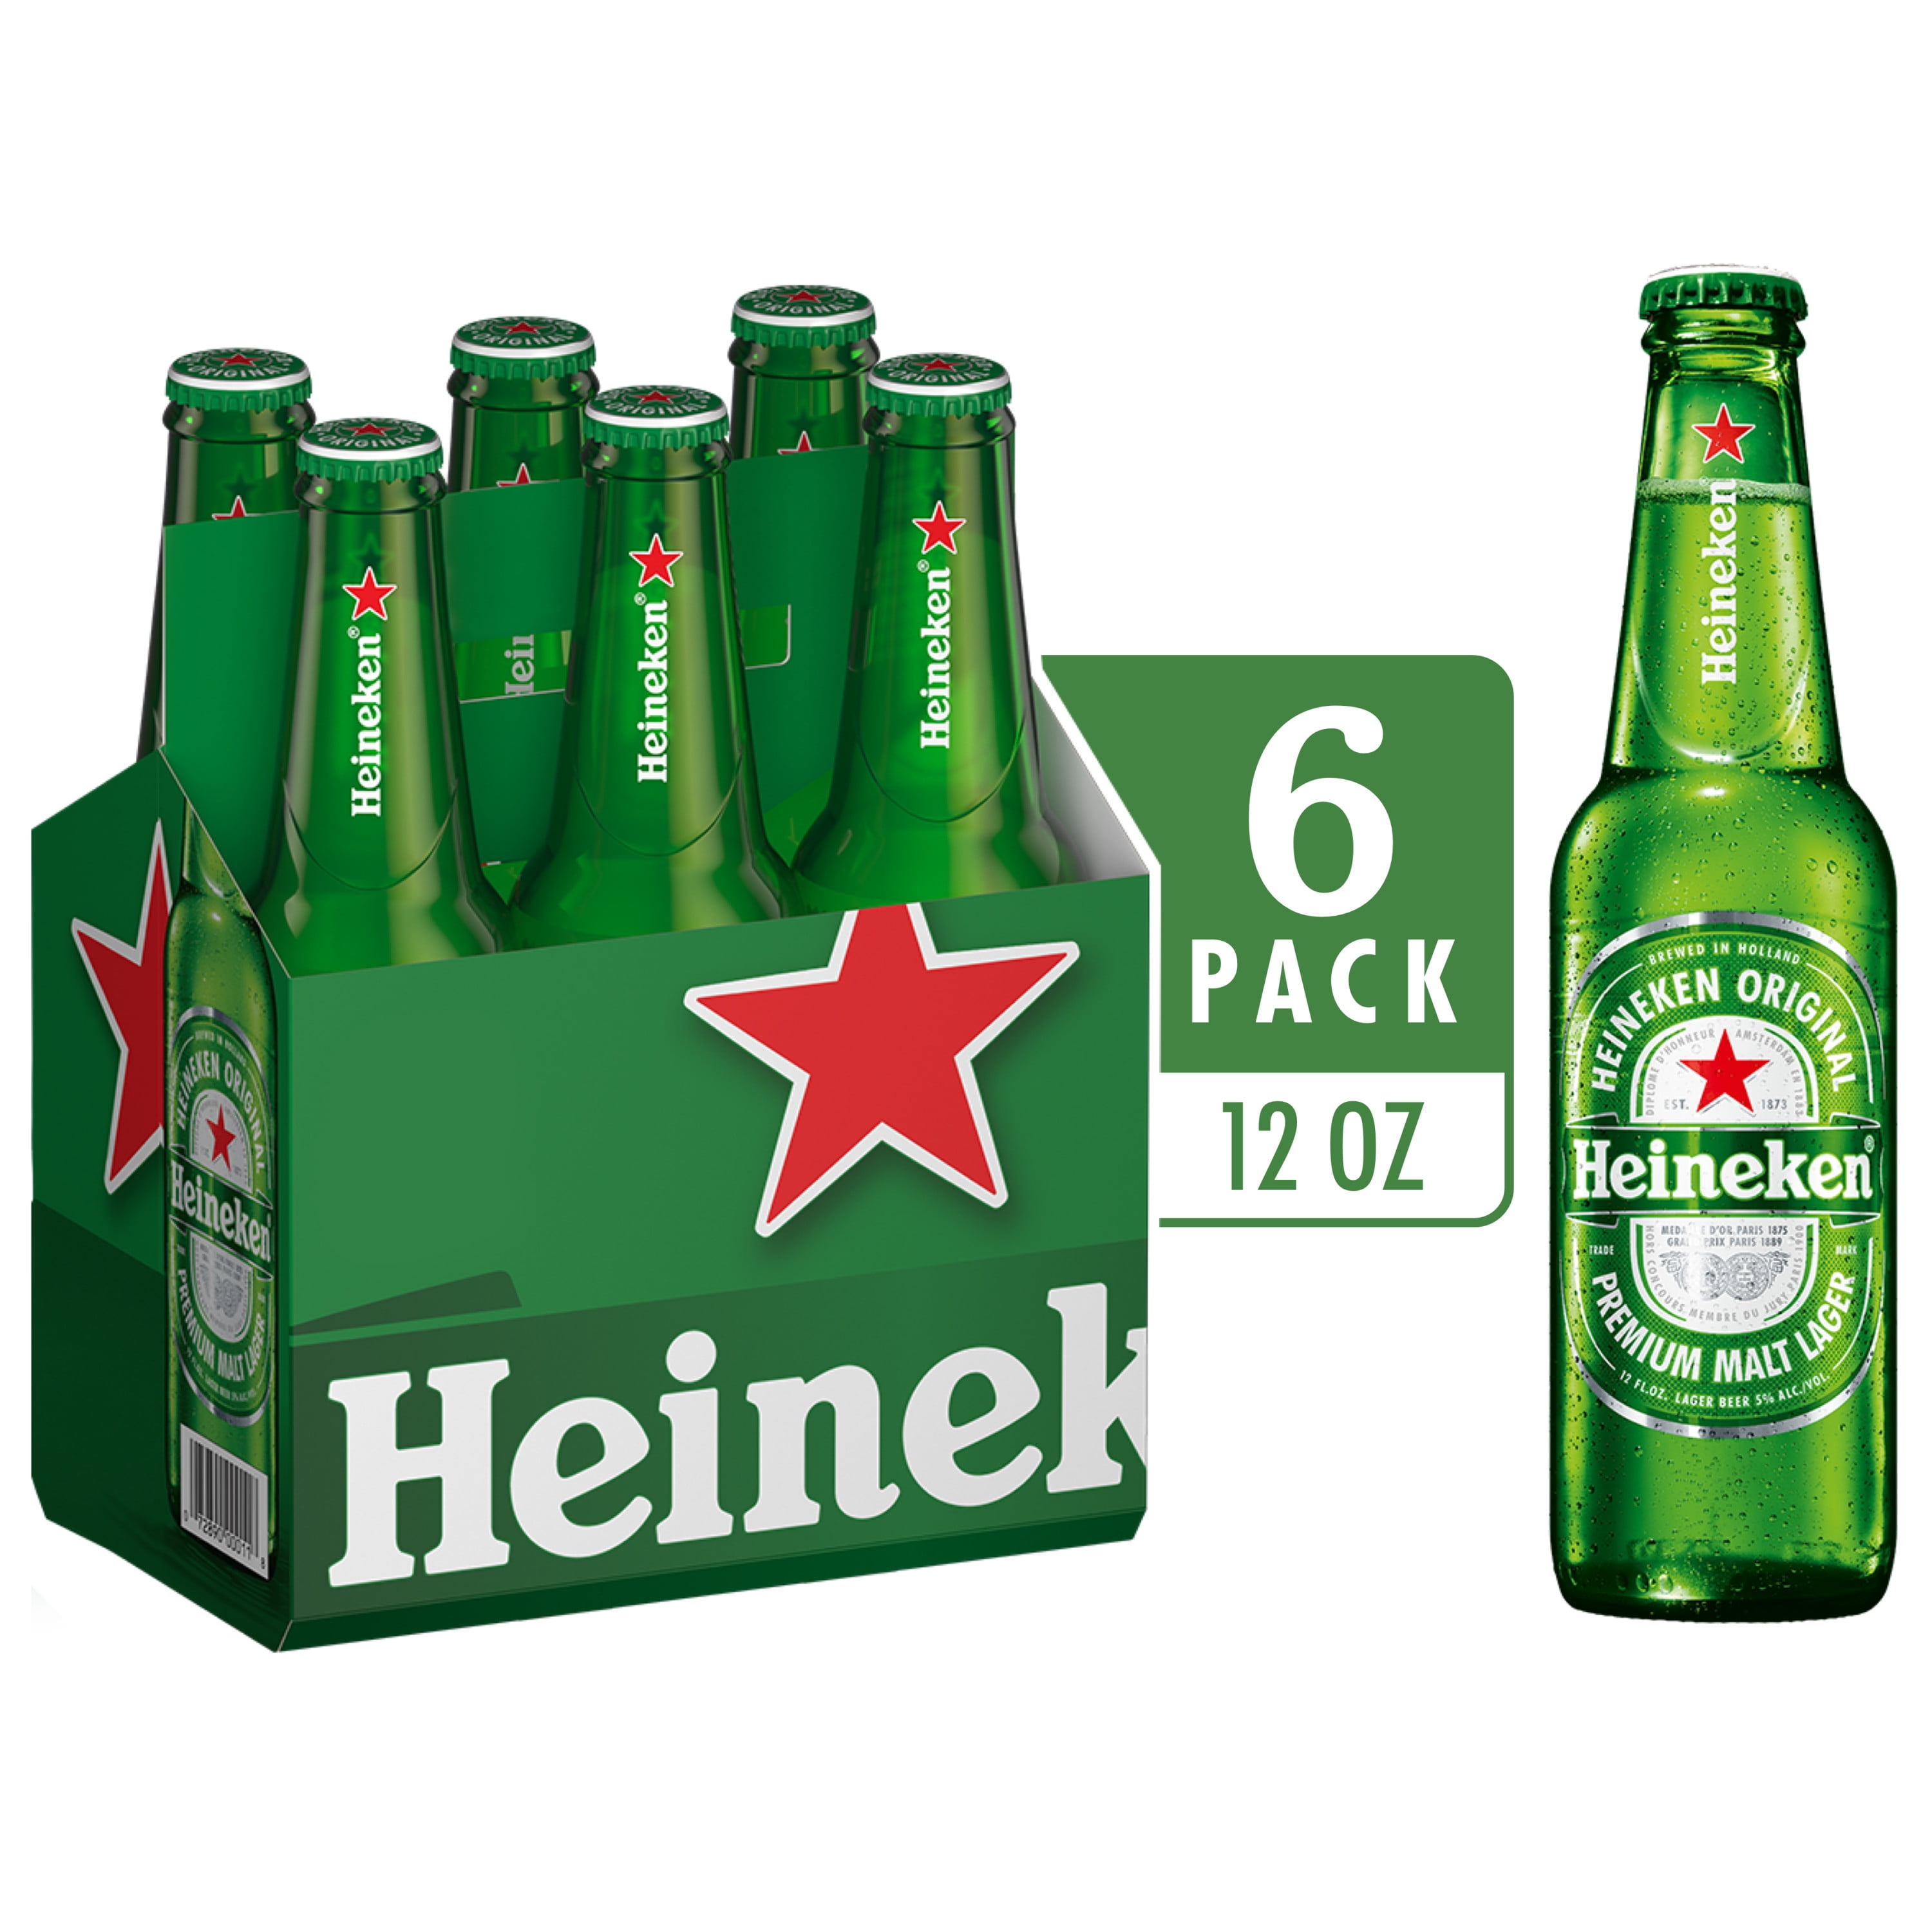 Heineken Original Lager Beer, 6 Pack, 12 fl oz Bottles, 5% Alcohol by Volume